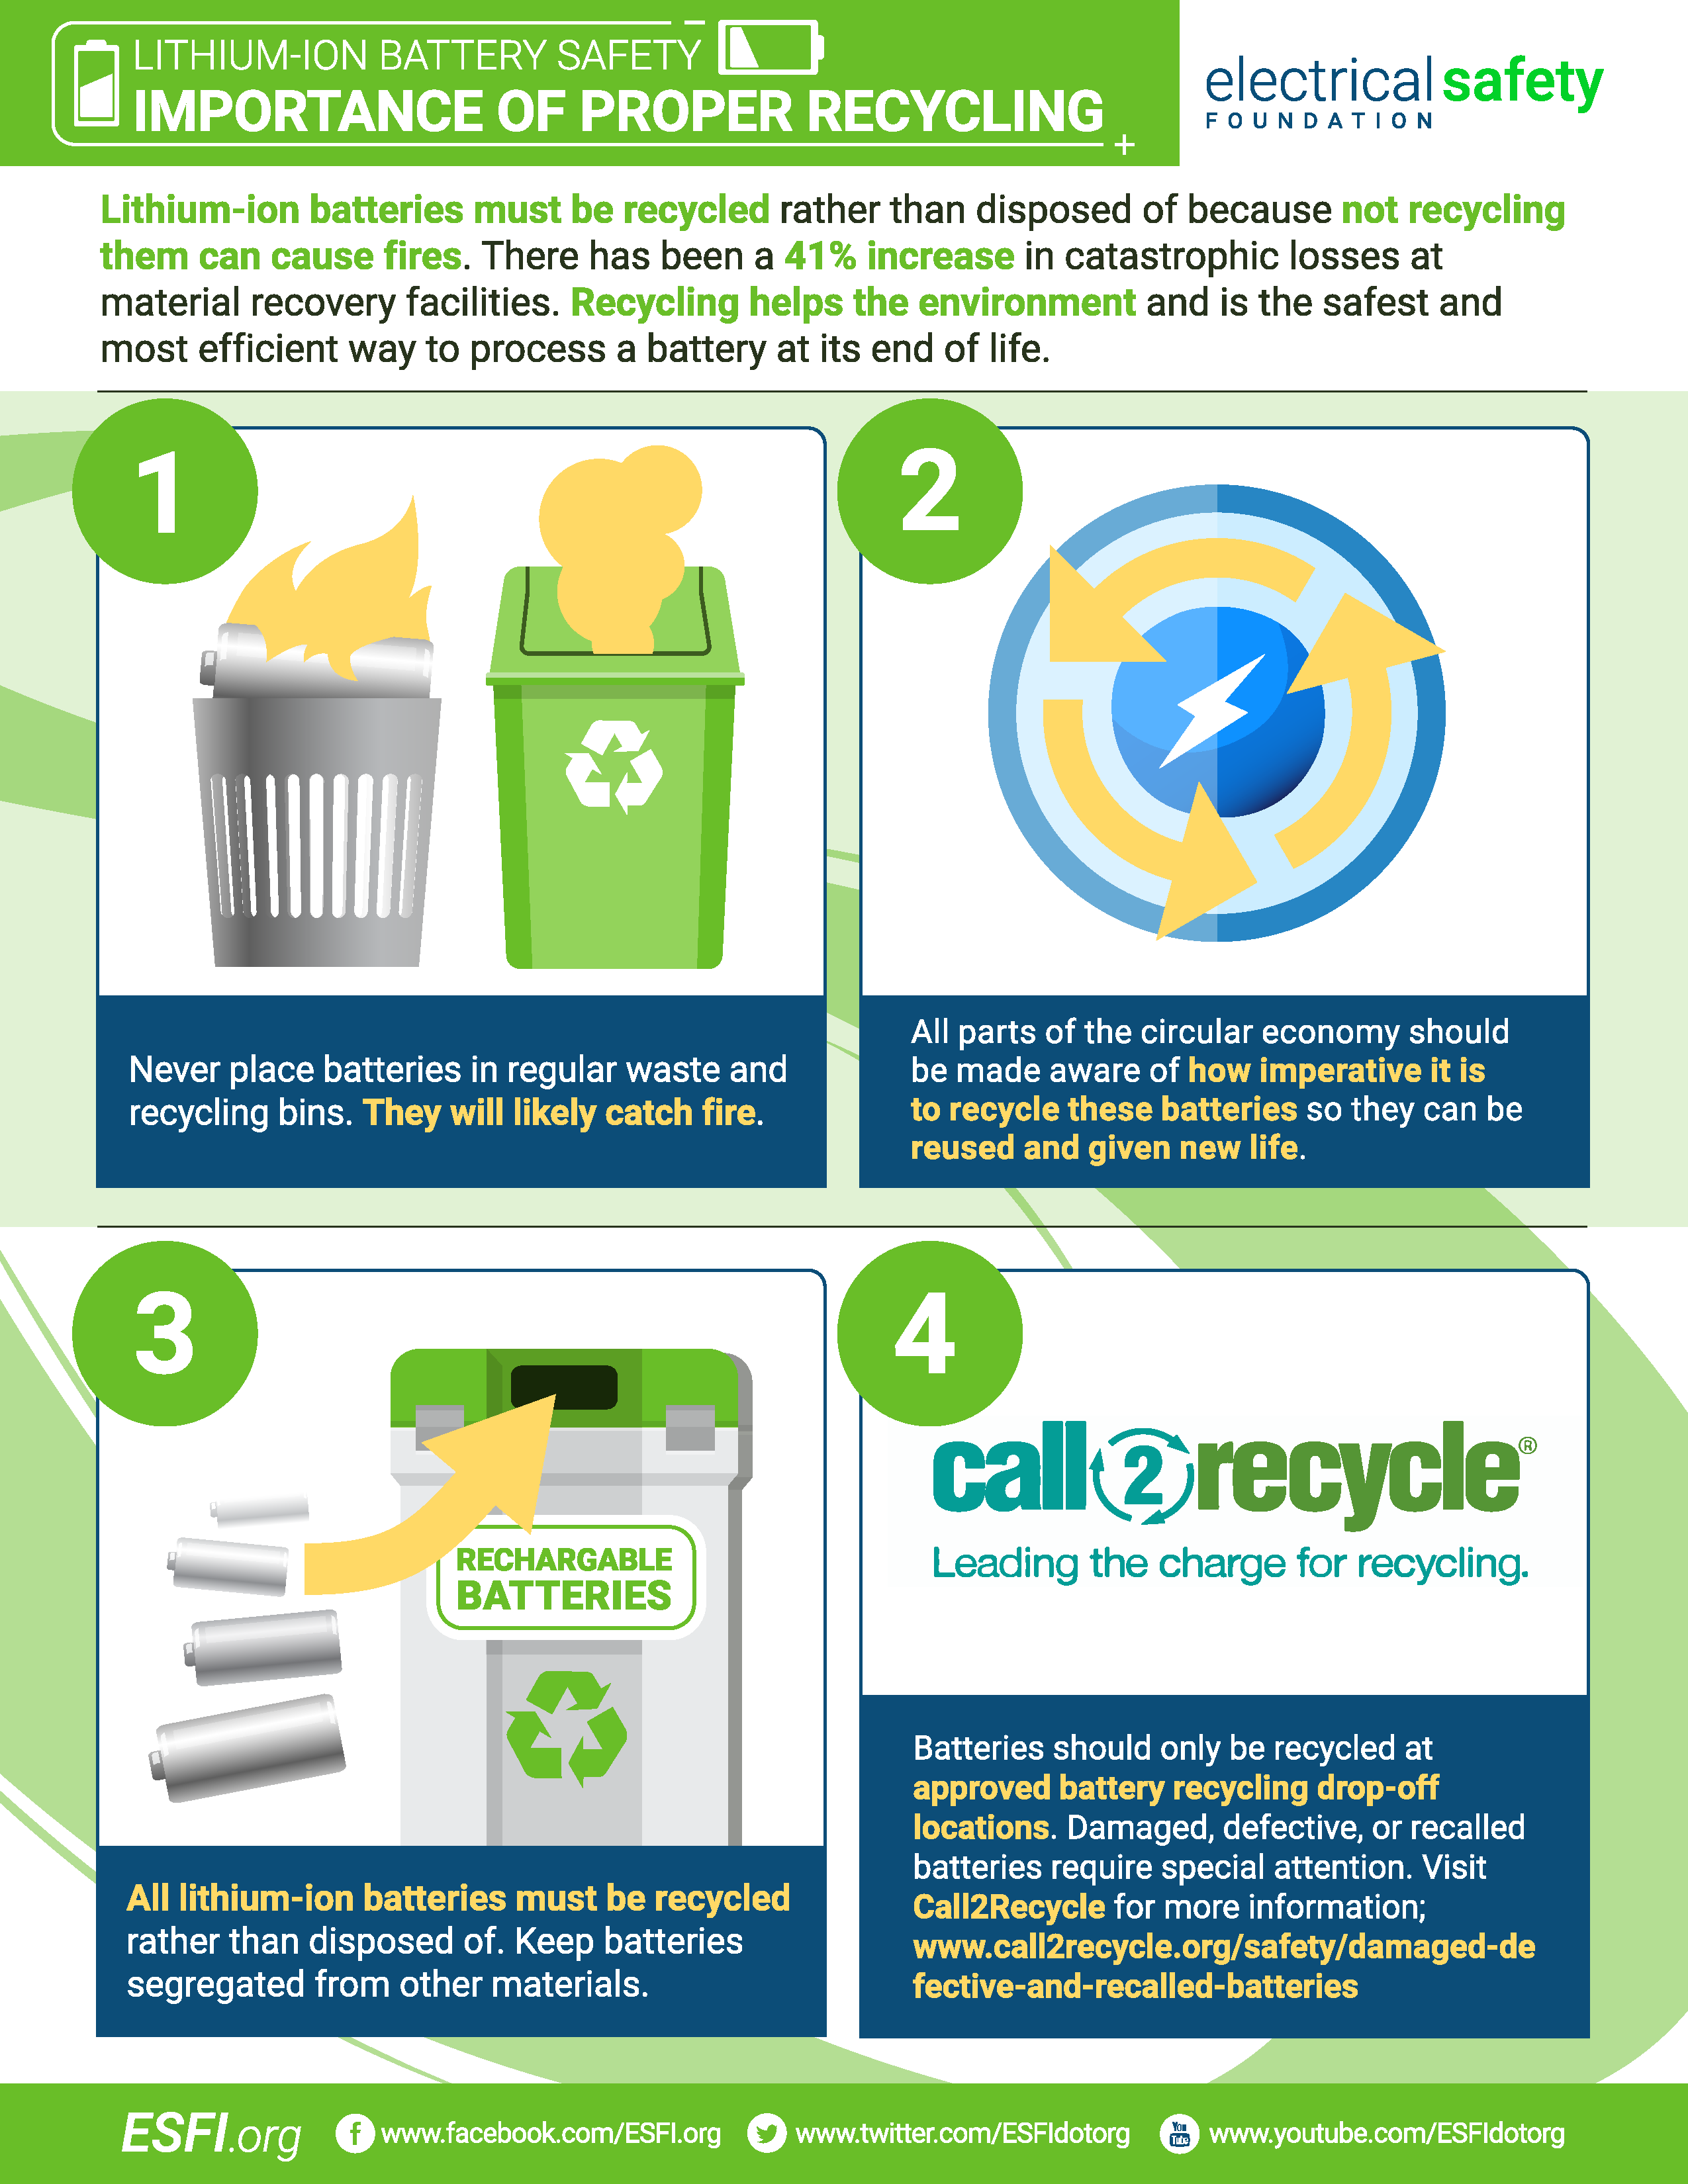 https://www.tamiu.edu/adminis/safety/documents/esfi-li-ion-safety-importance-of-recycling.pdf